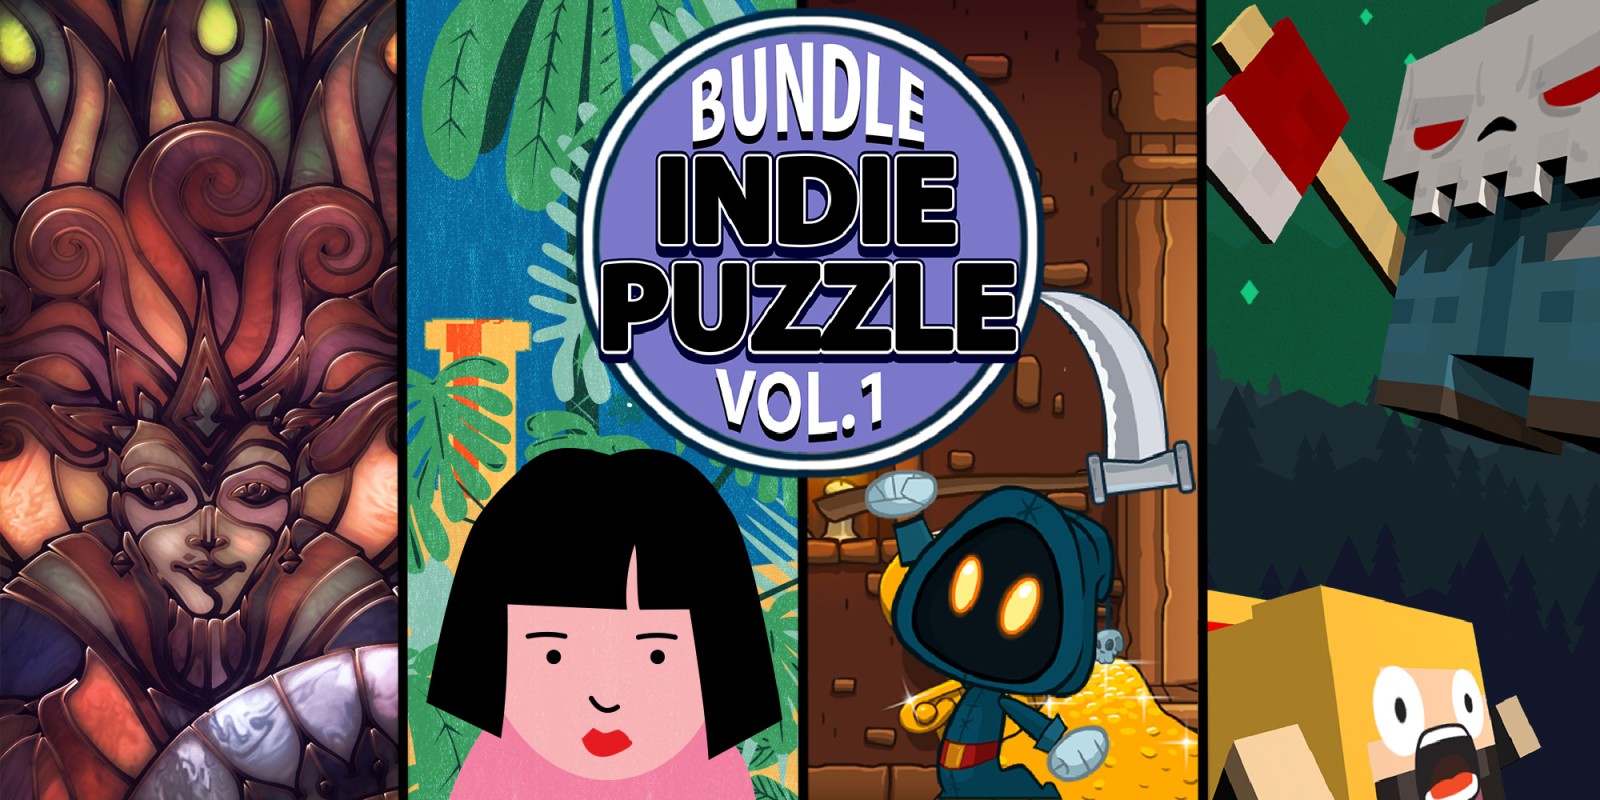 Indie Puzzle Bundle Vol 1